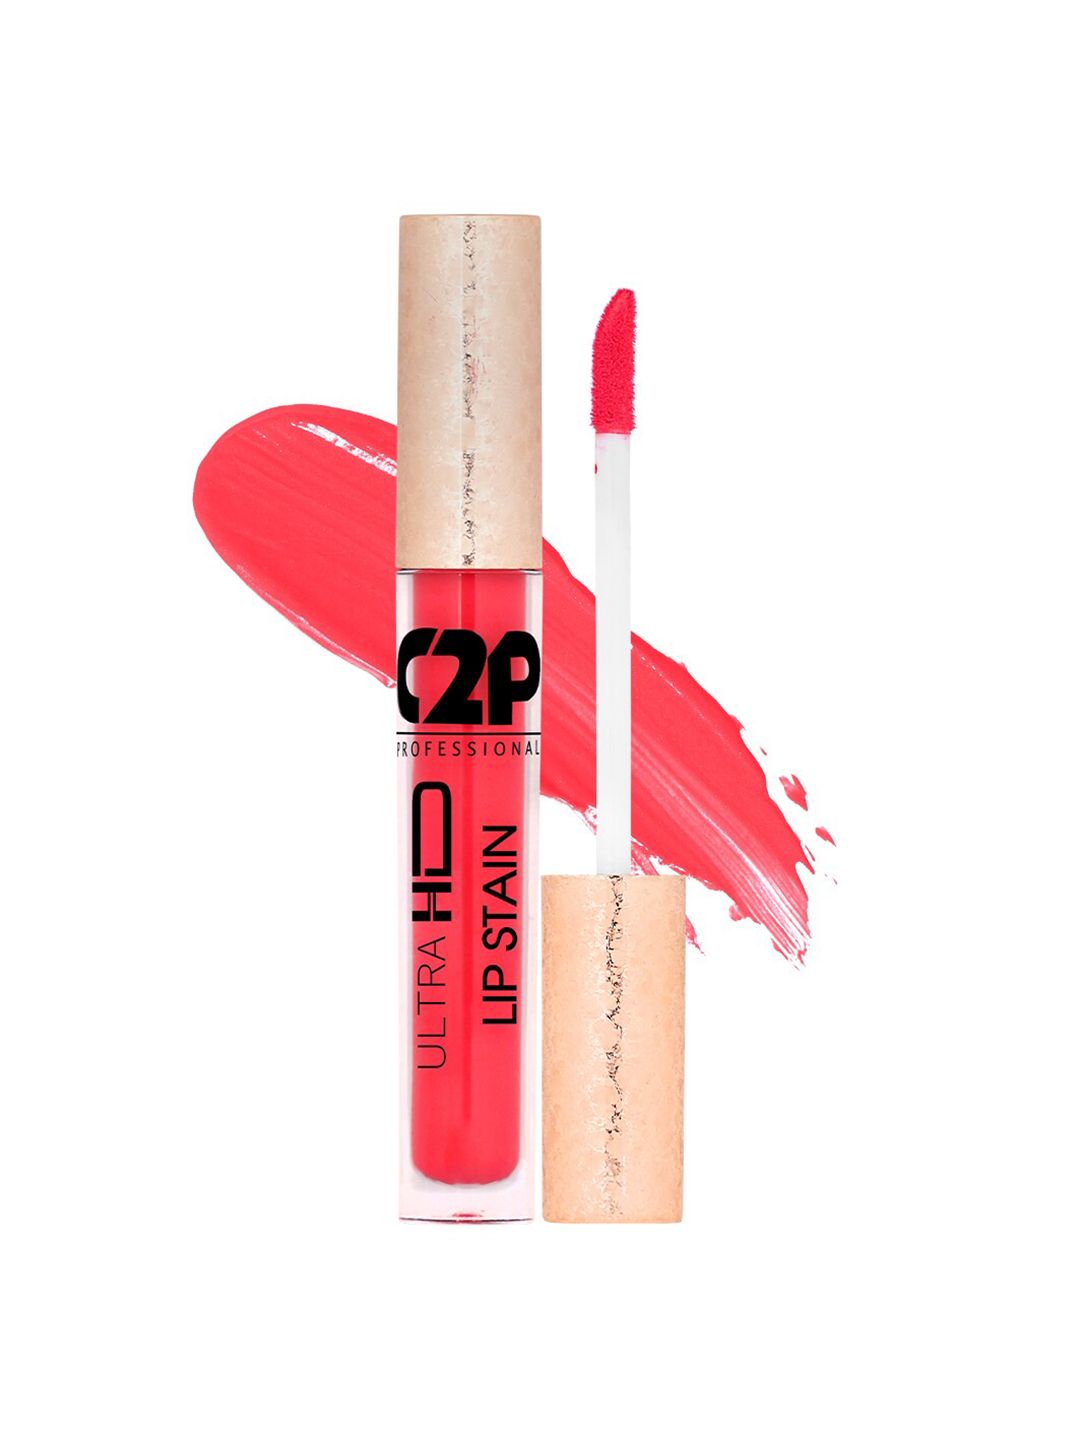 C2P PROFESSIONAL MAKEUP Ultra HD Liquid Lip Stain 5ml - Simply Blush 24 Price in India